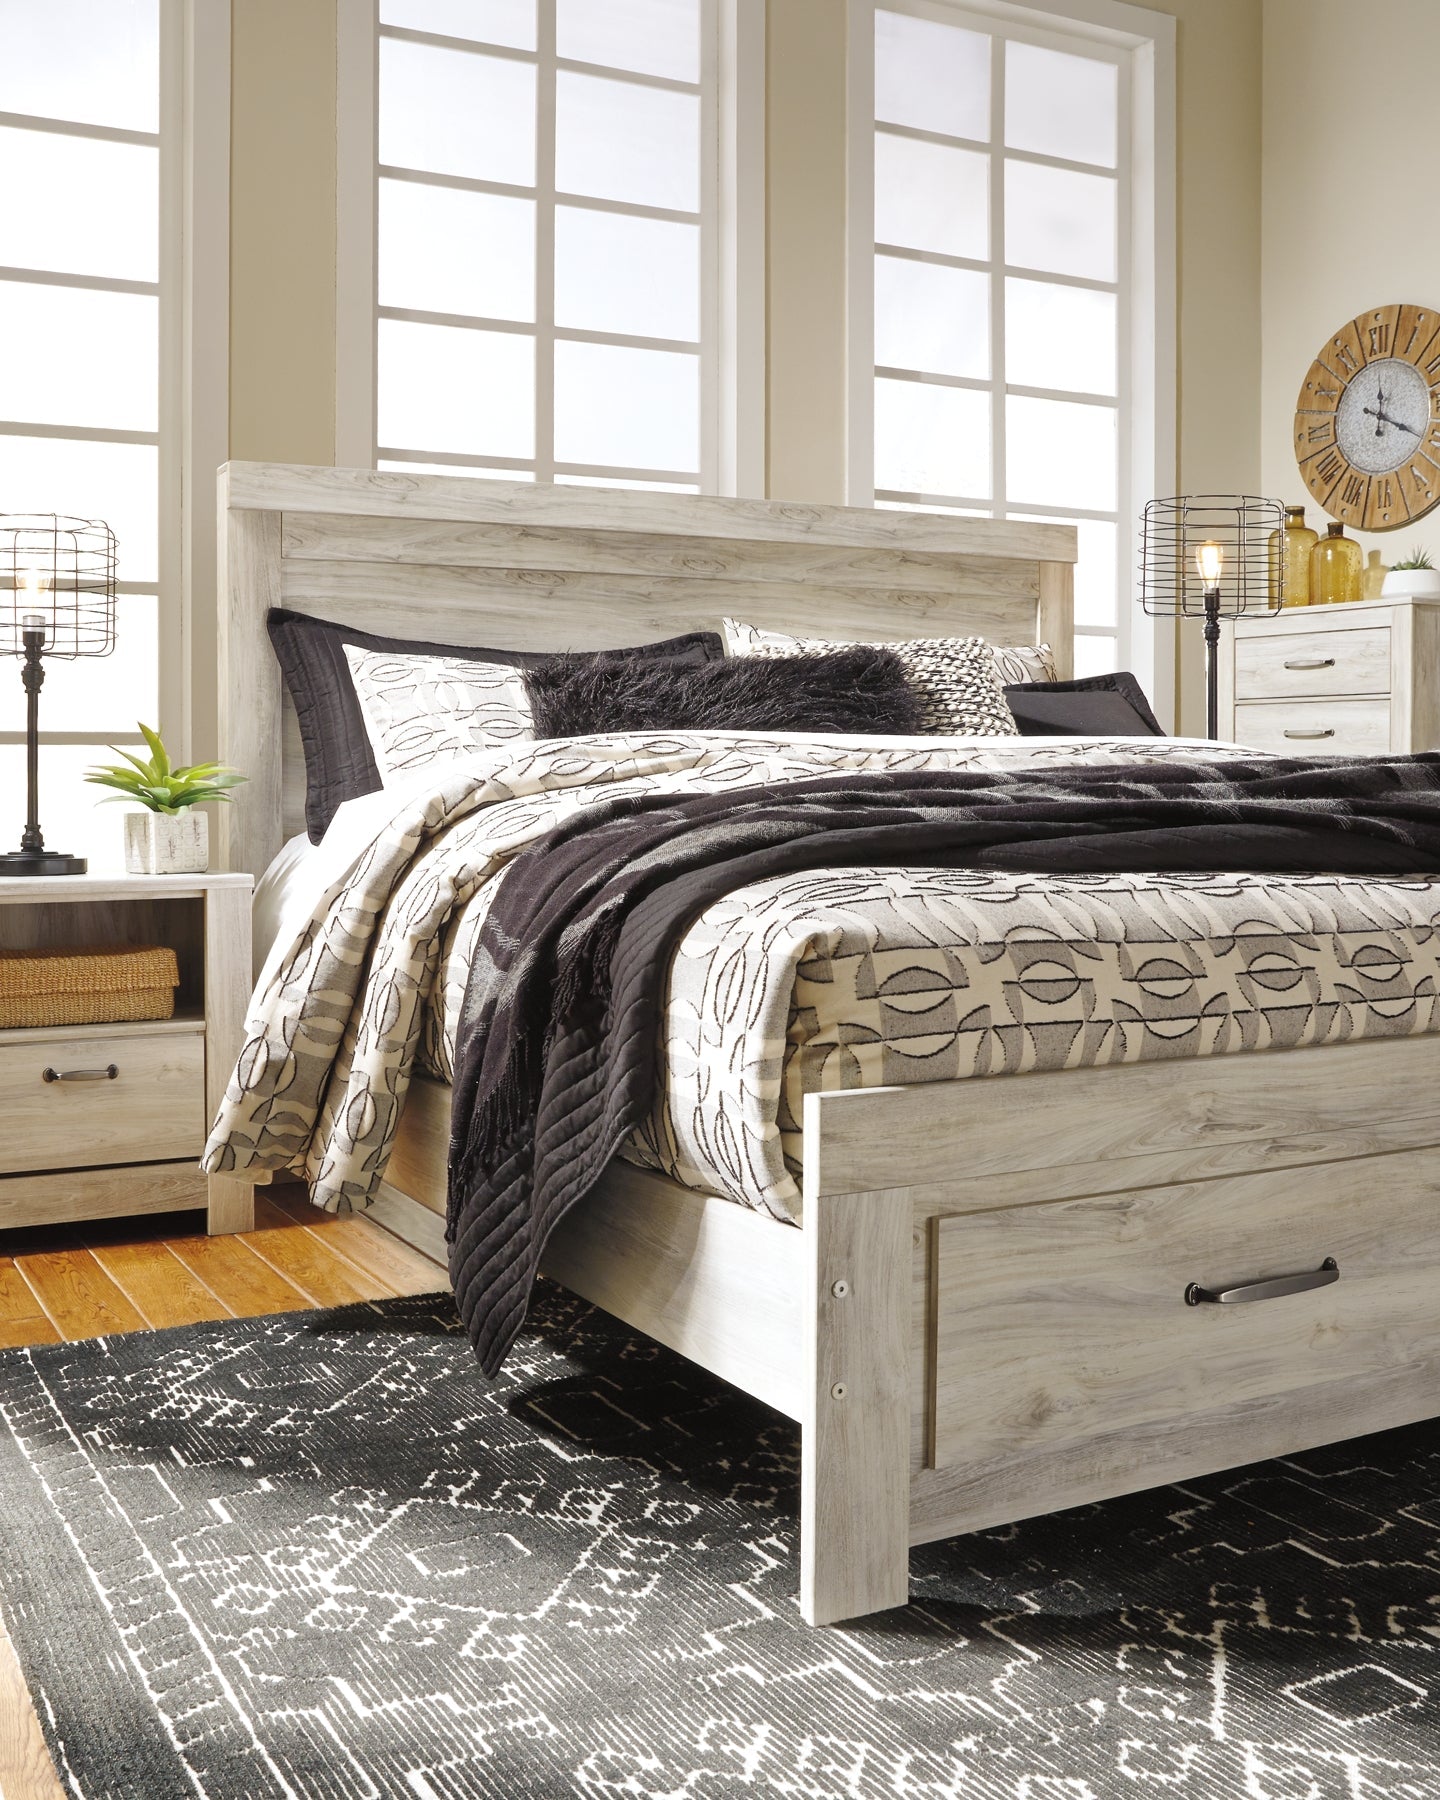 Bellaby Queen Panel Bed with 2 Nightstands Cloud 9 Mattress & Furniture